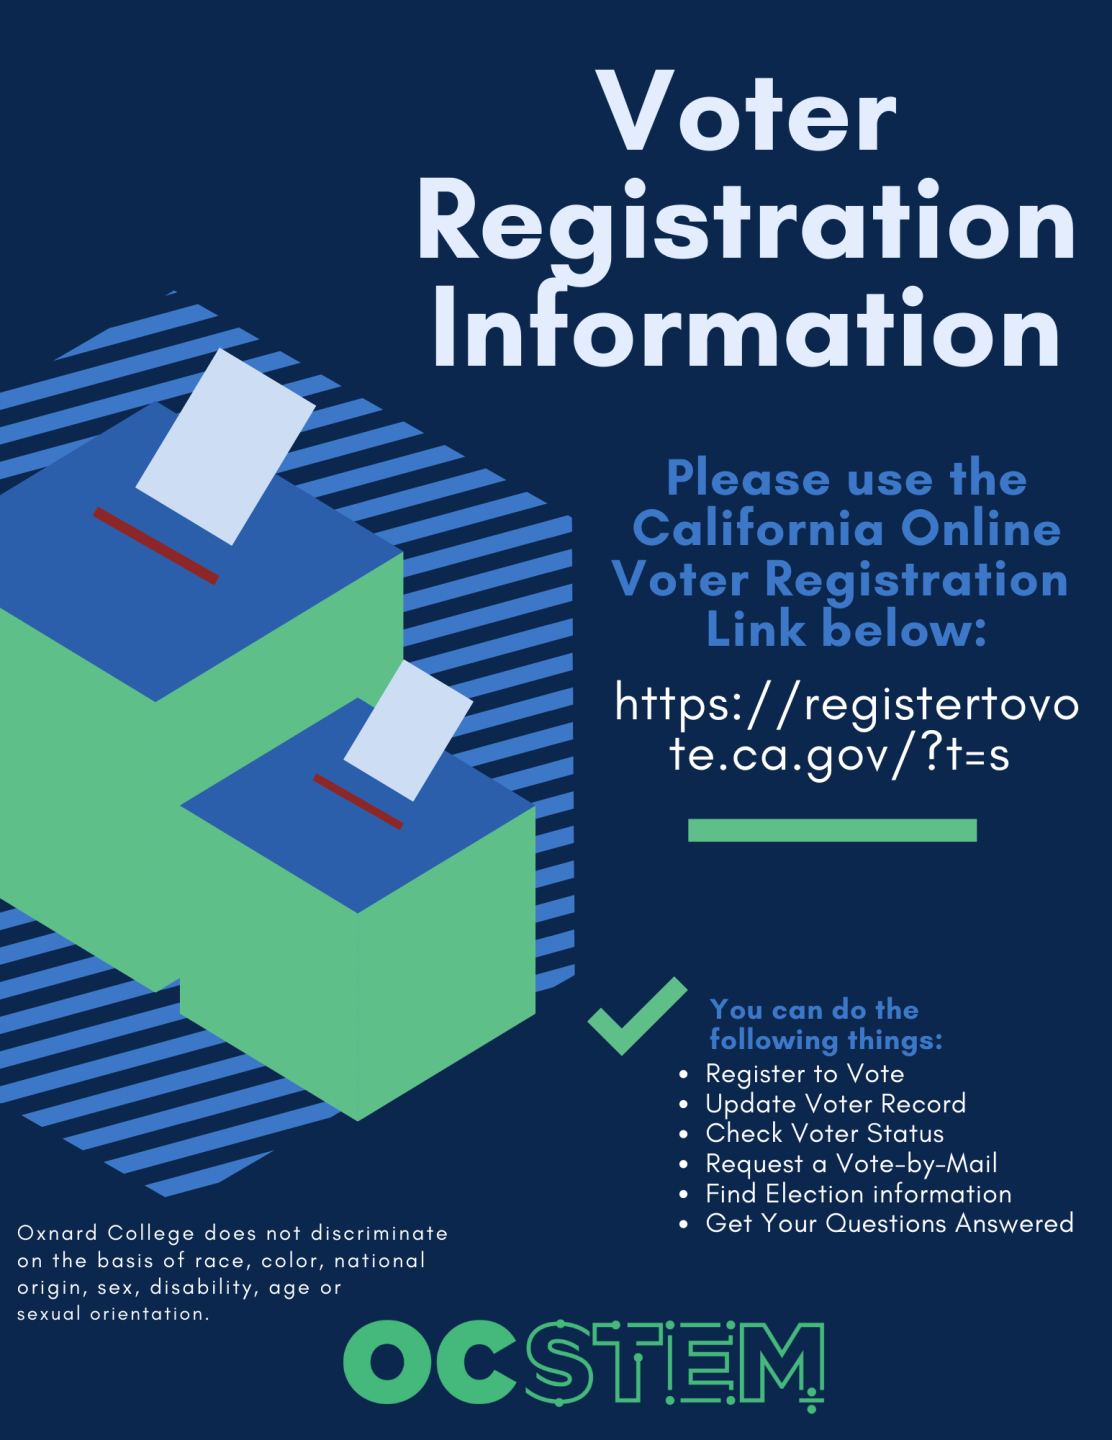 Fall 22 Voter Registration Information flyer